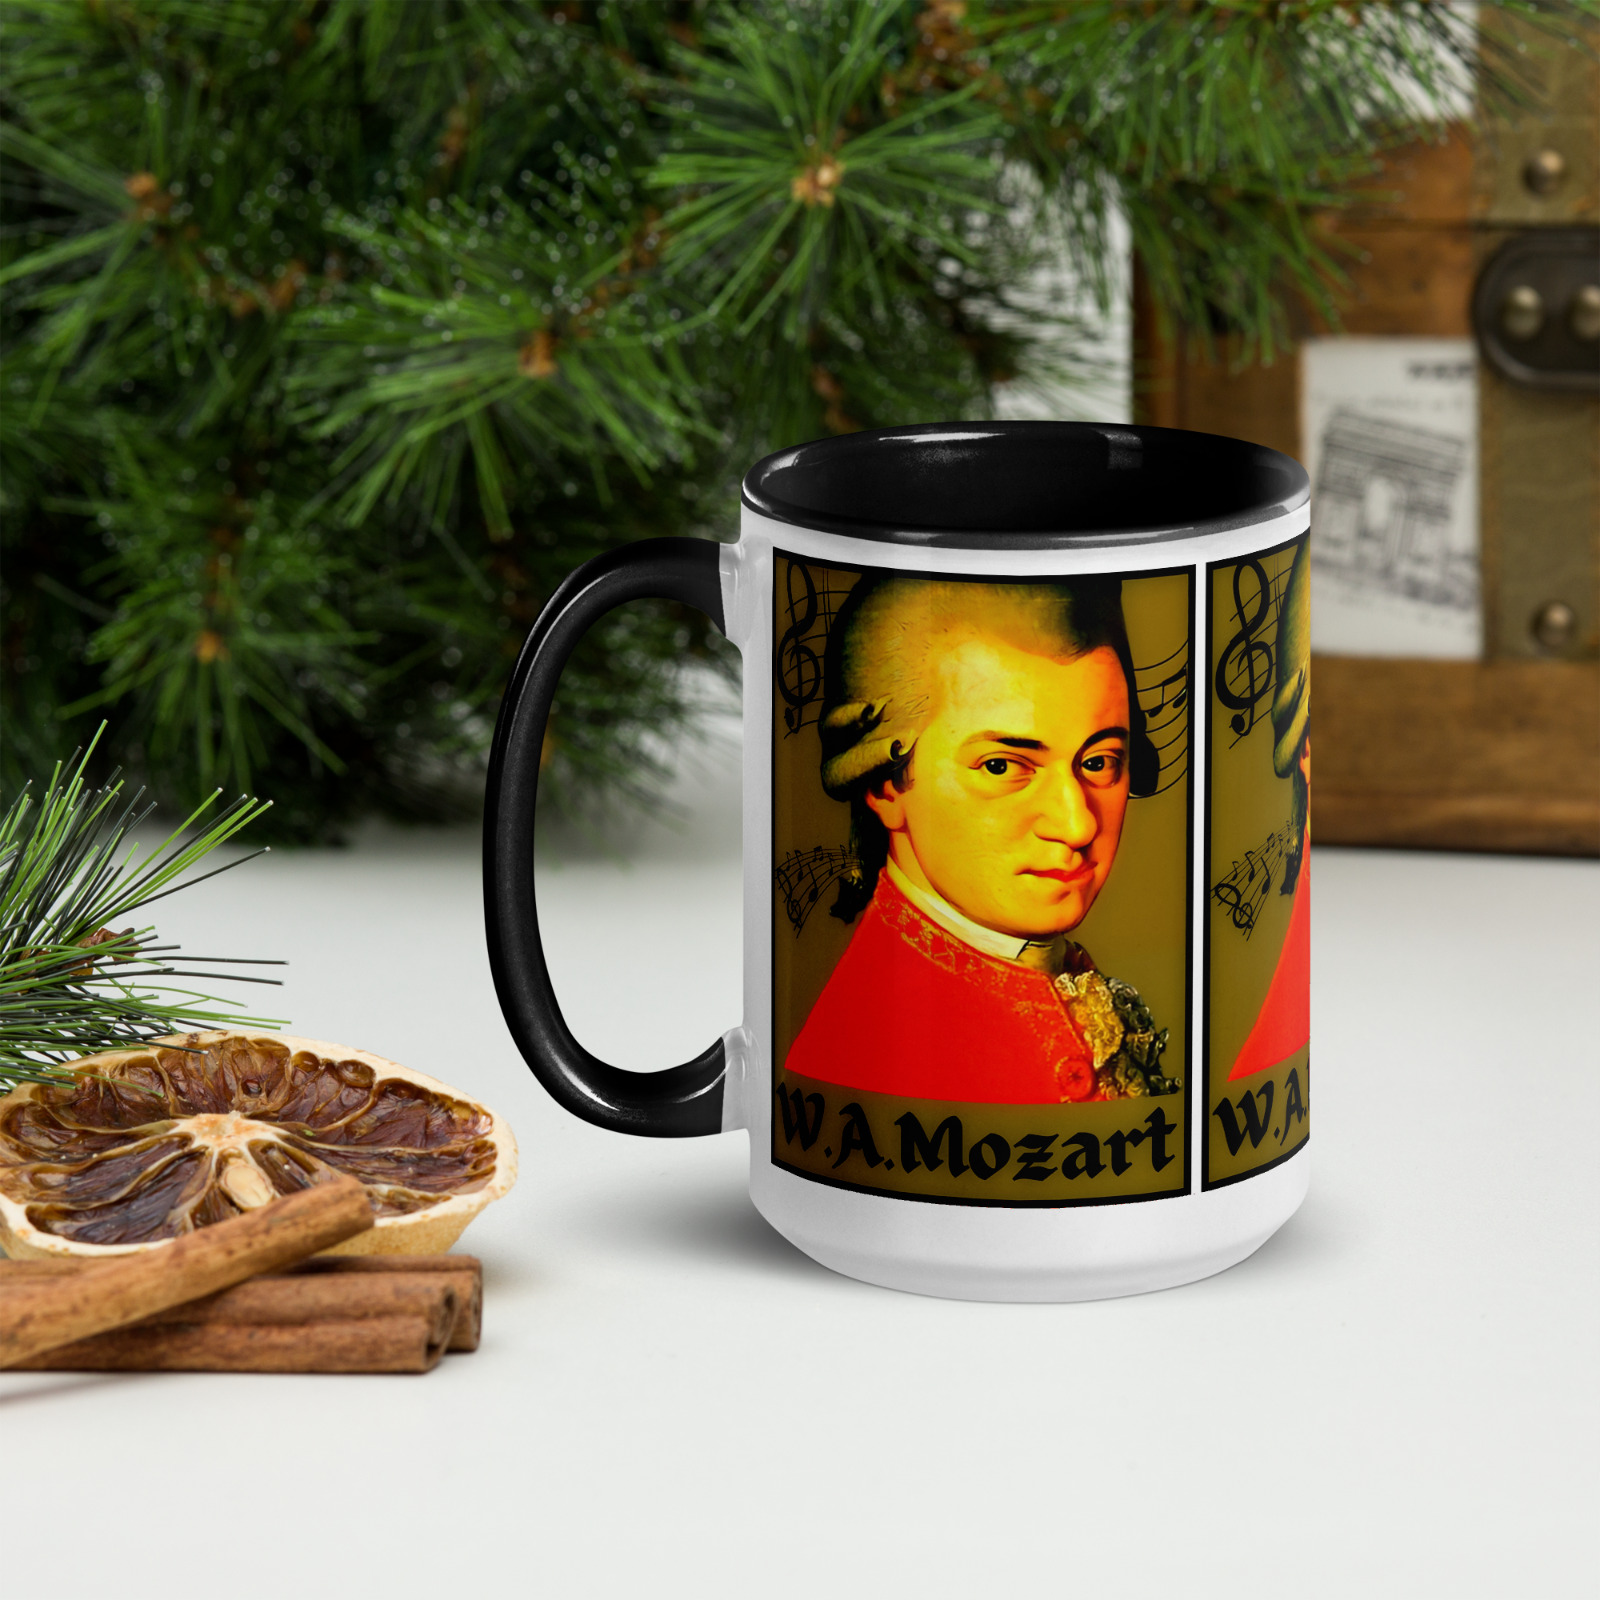 Wolfgang Amadeus Mozart 1756-1791 composer NEW High-Quality Coffee Mug 15 Oz